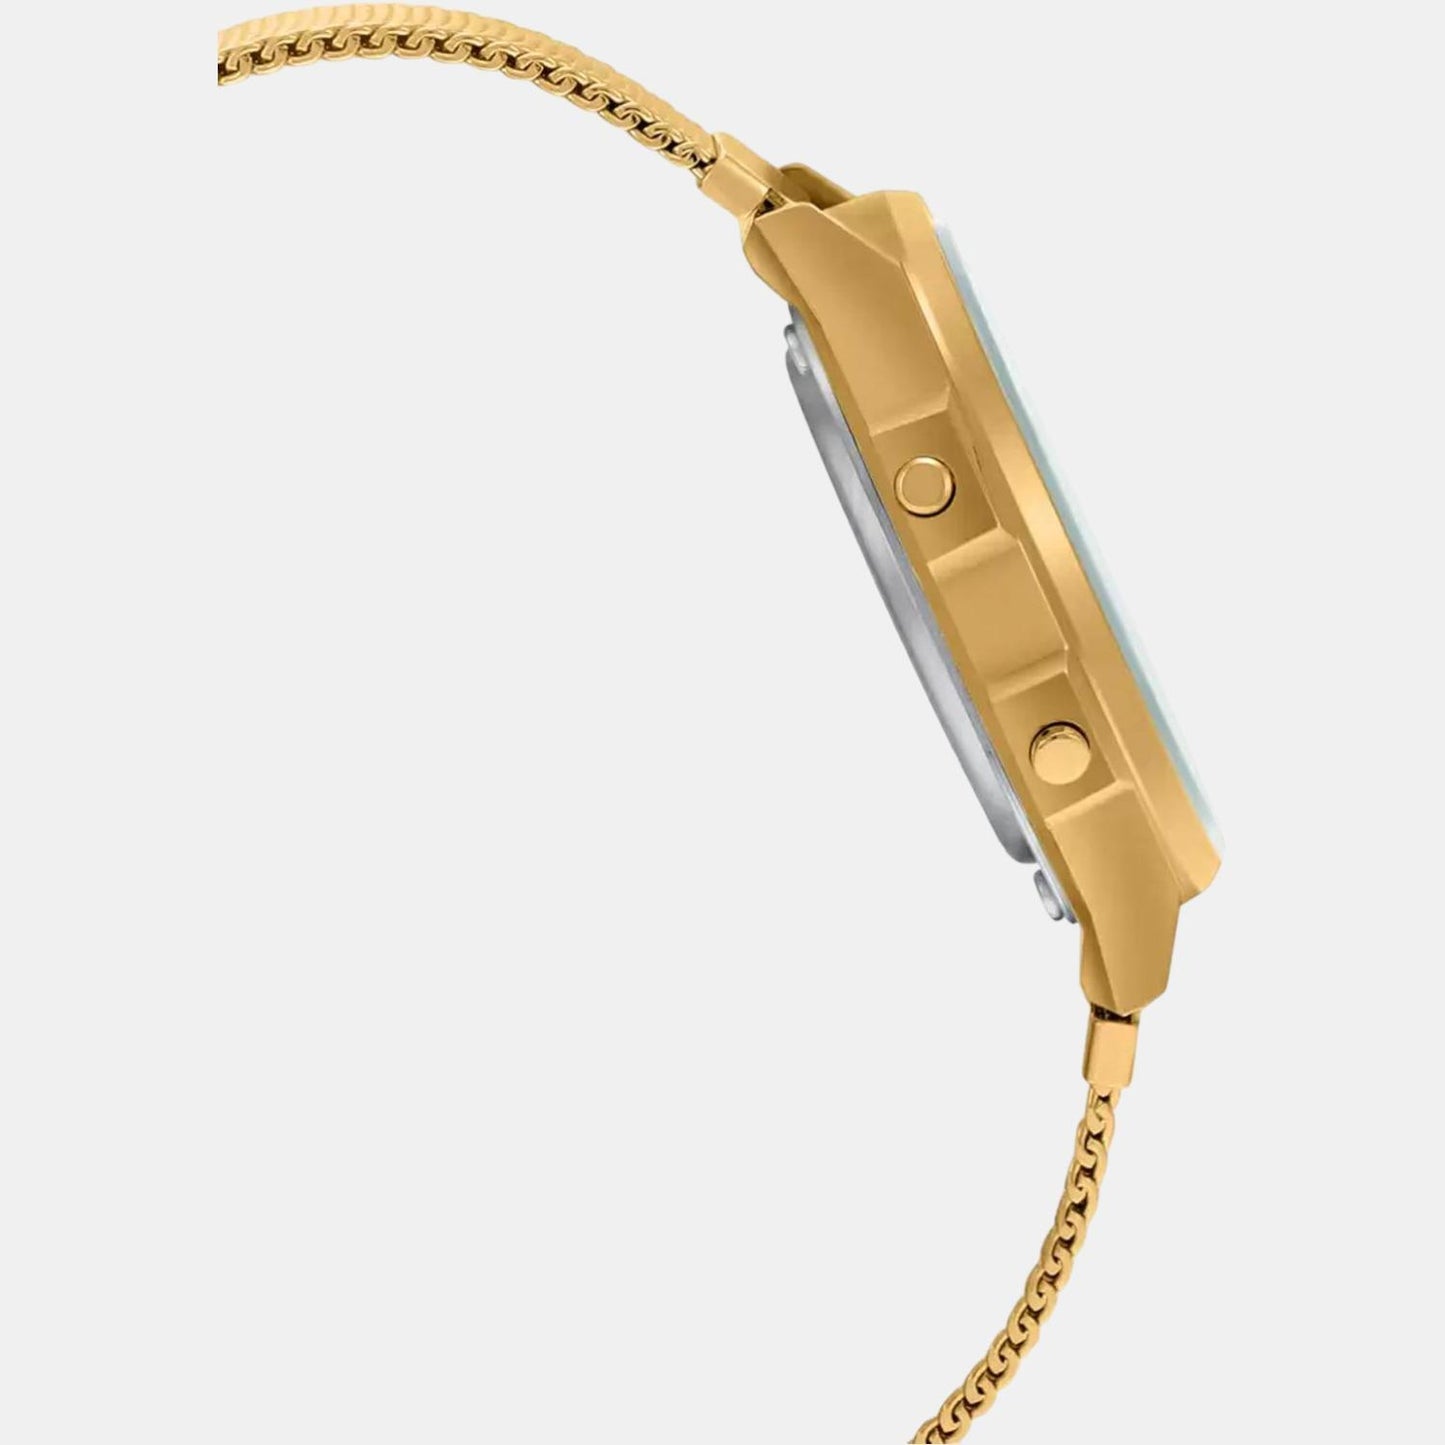 casio-resin-gold-digital-unisex-watch-d226